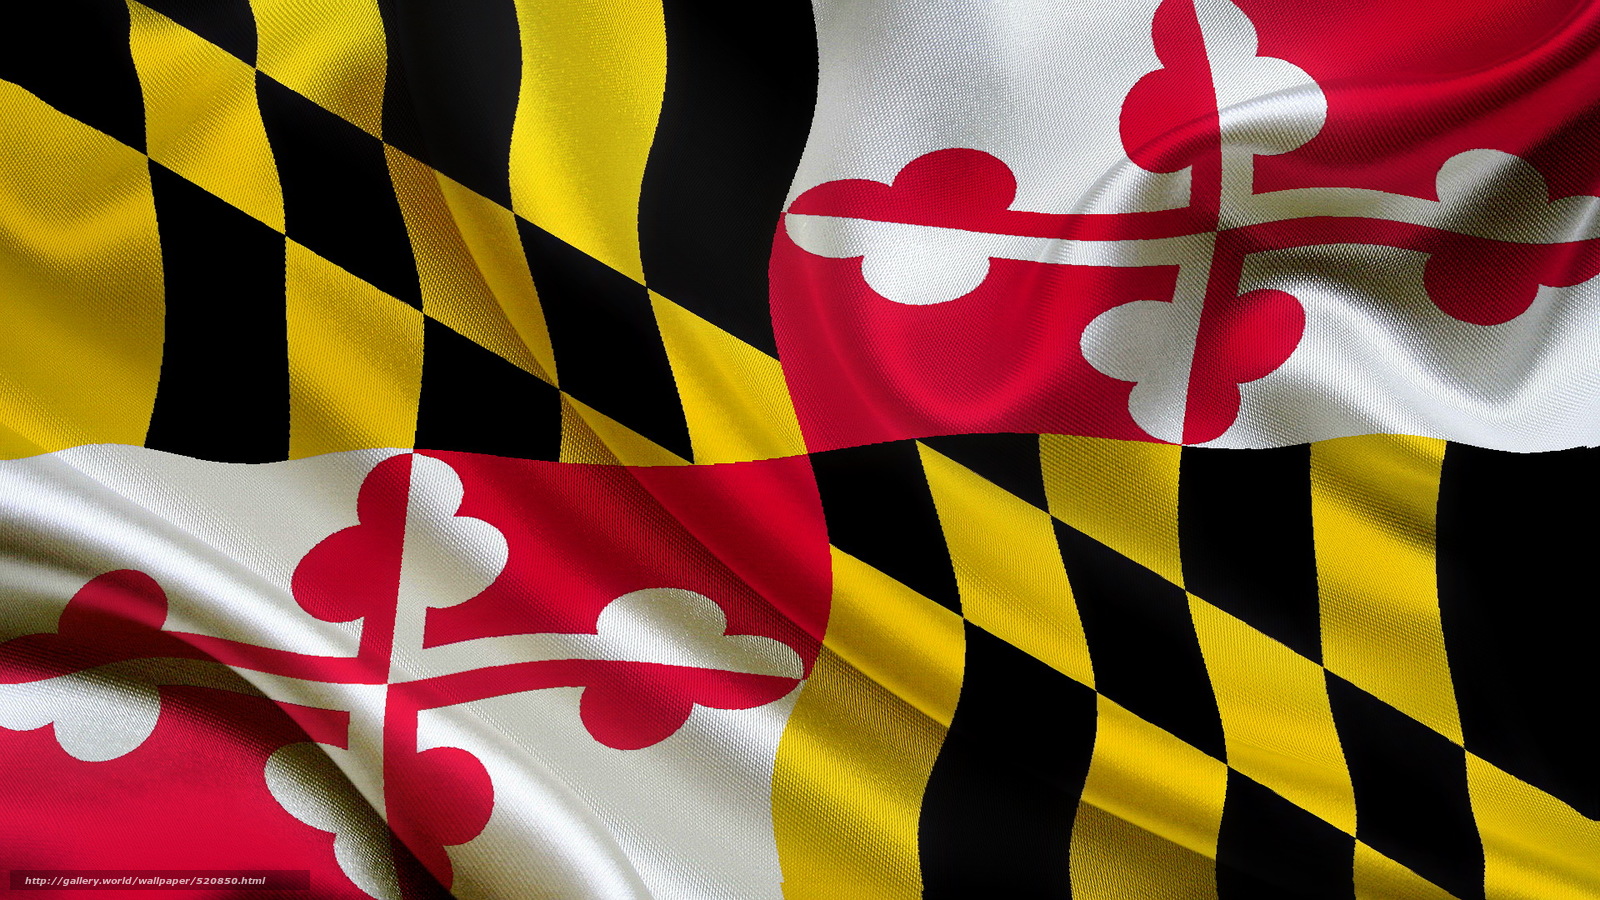 Wallpaper Flag State Maryland Desktop In The